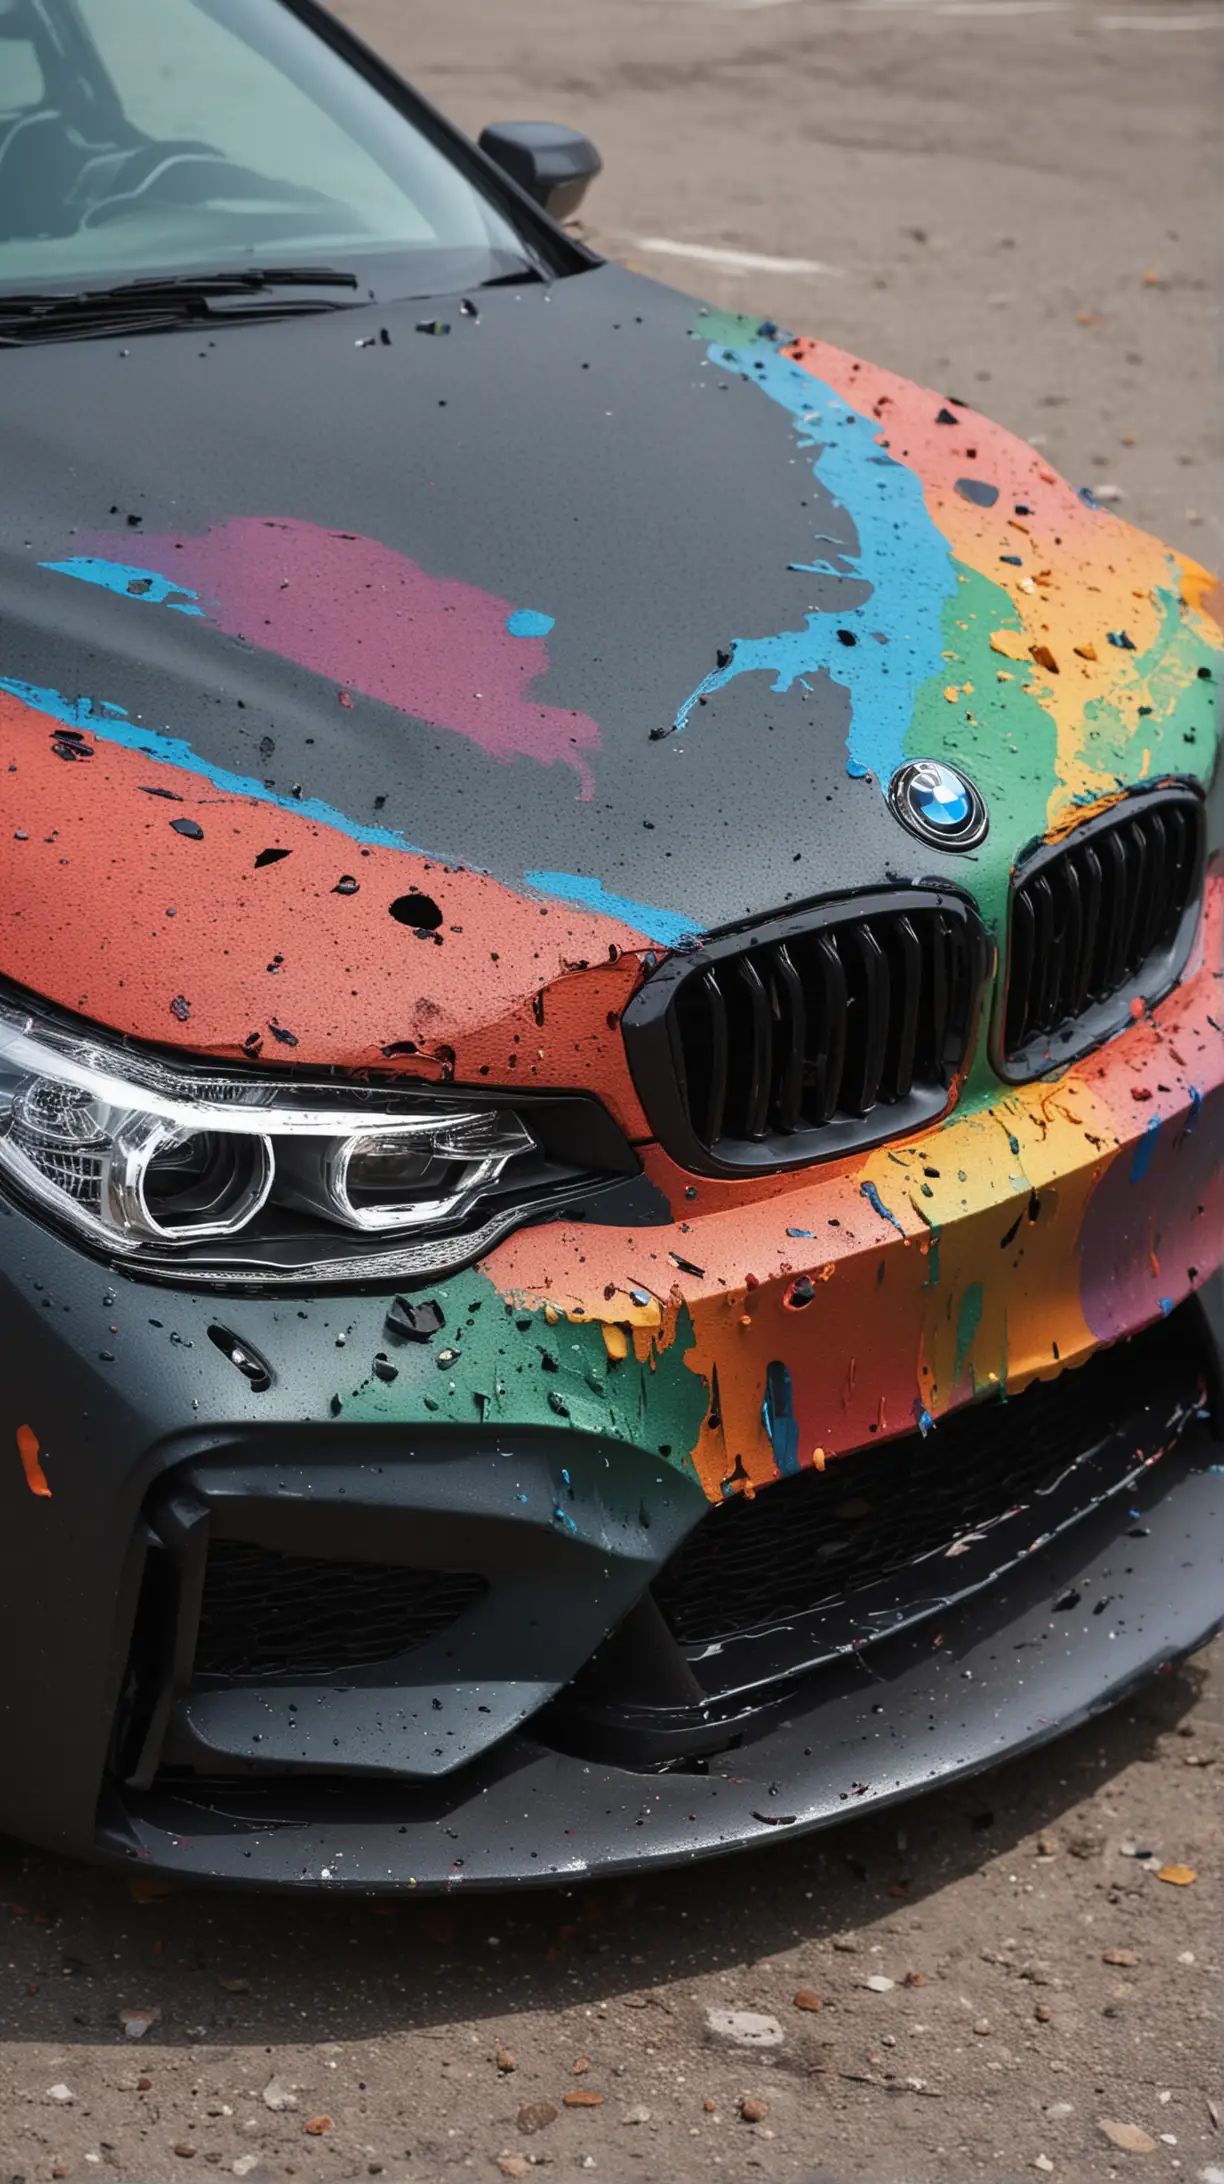 Vibrant Paint Splatter Adorning Illuminated BMW Car